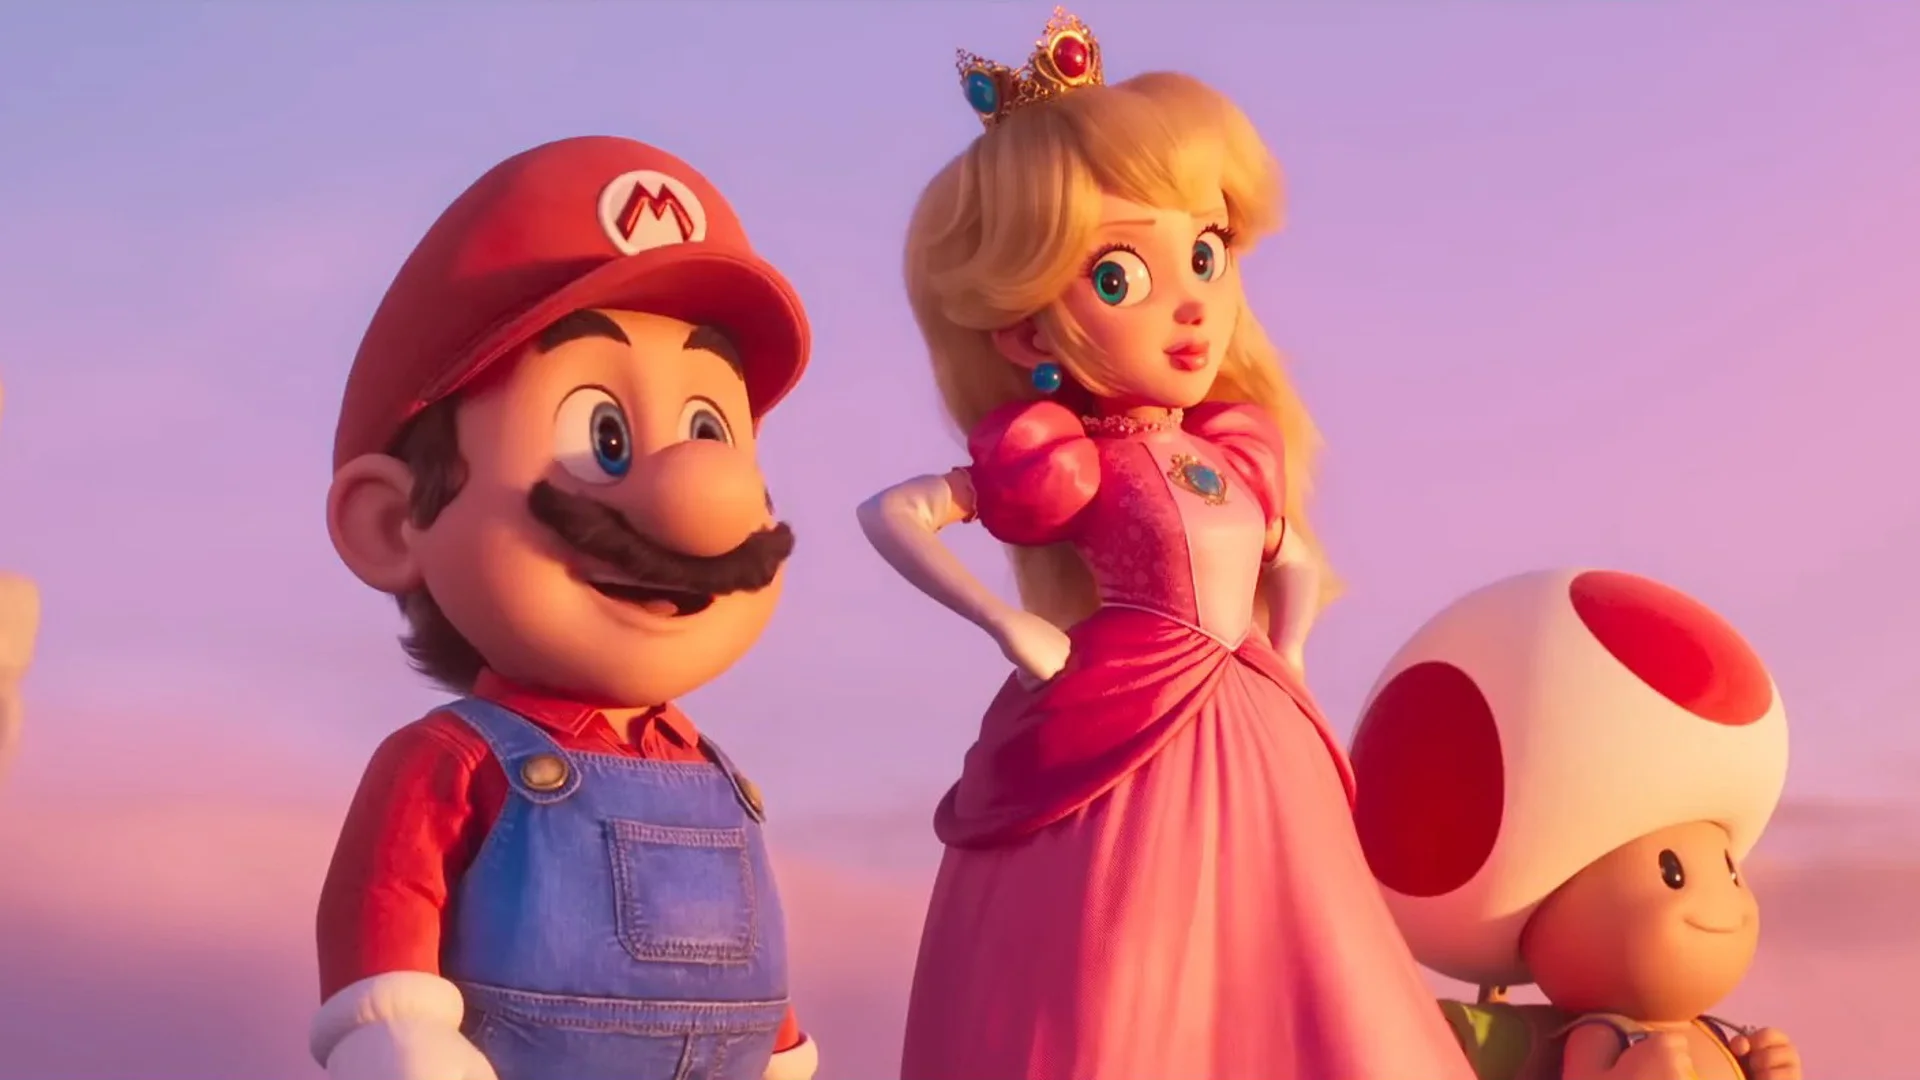 Cartoon Super Mario Bros. got a new release date